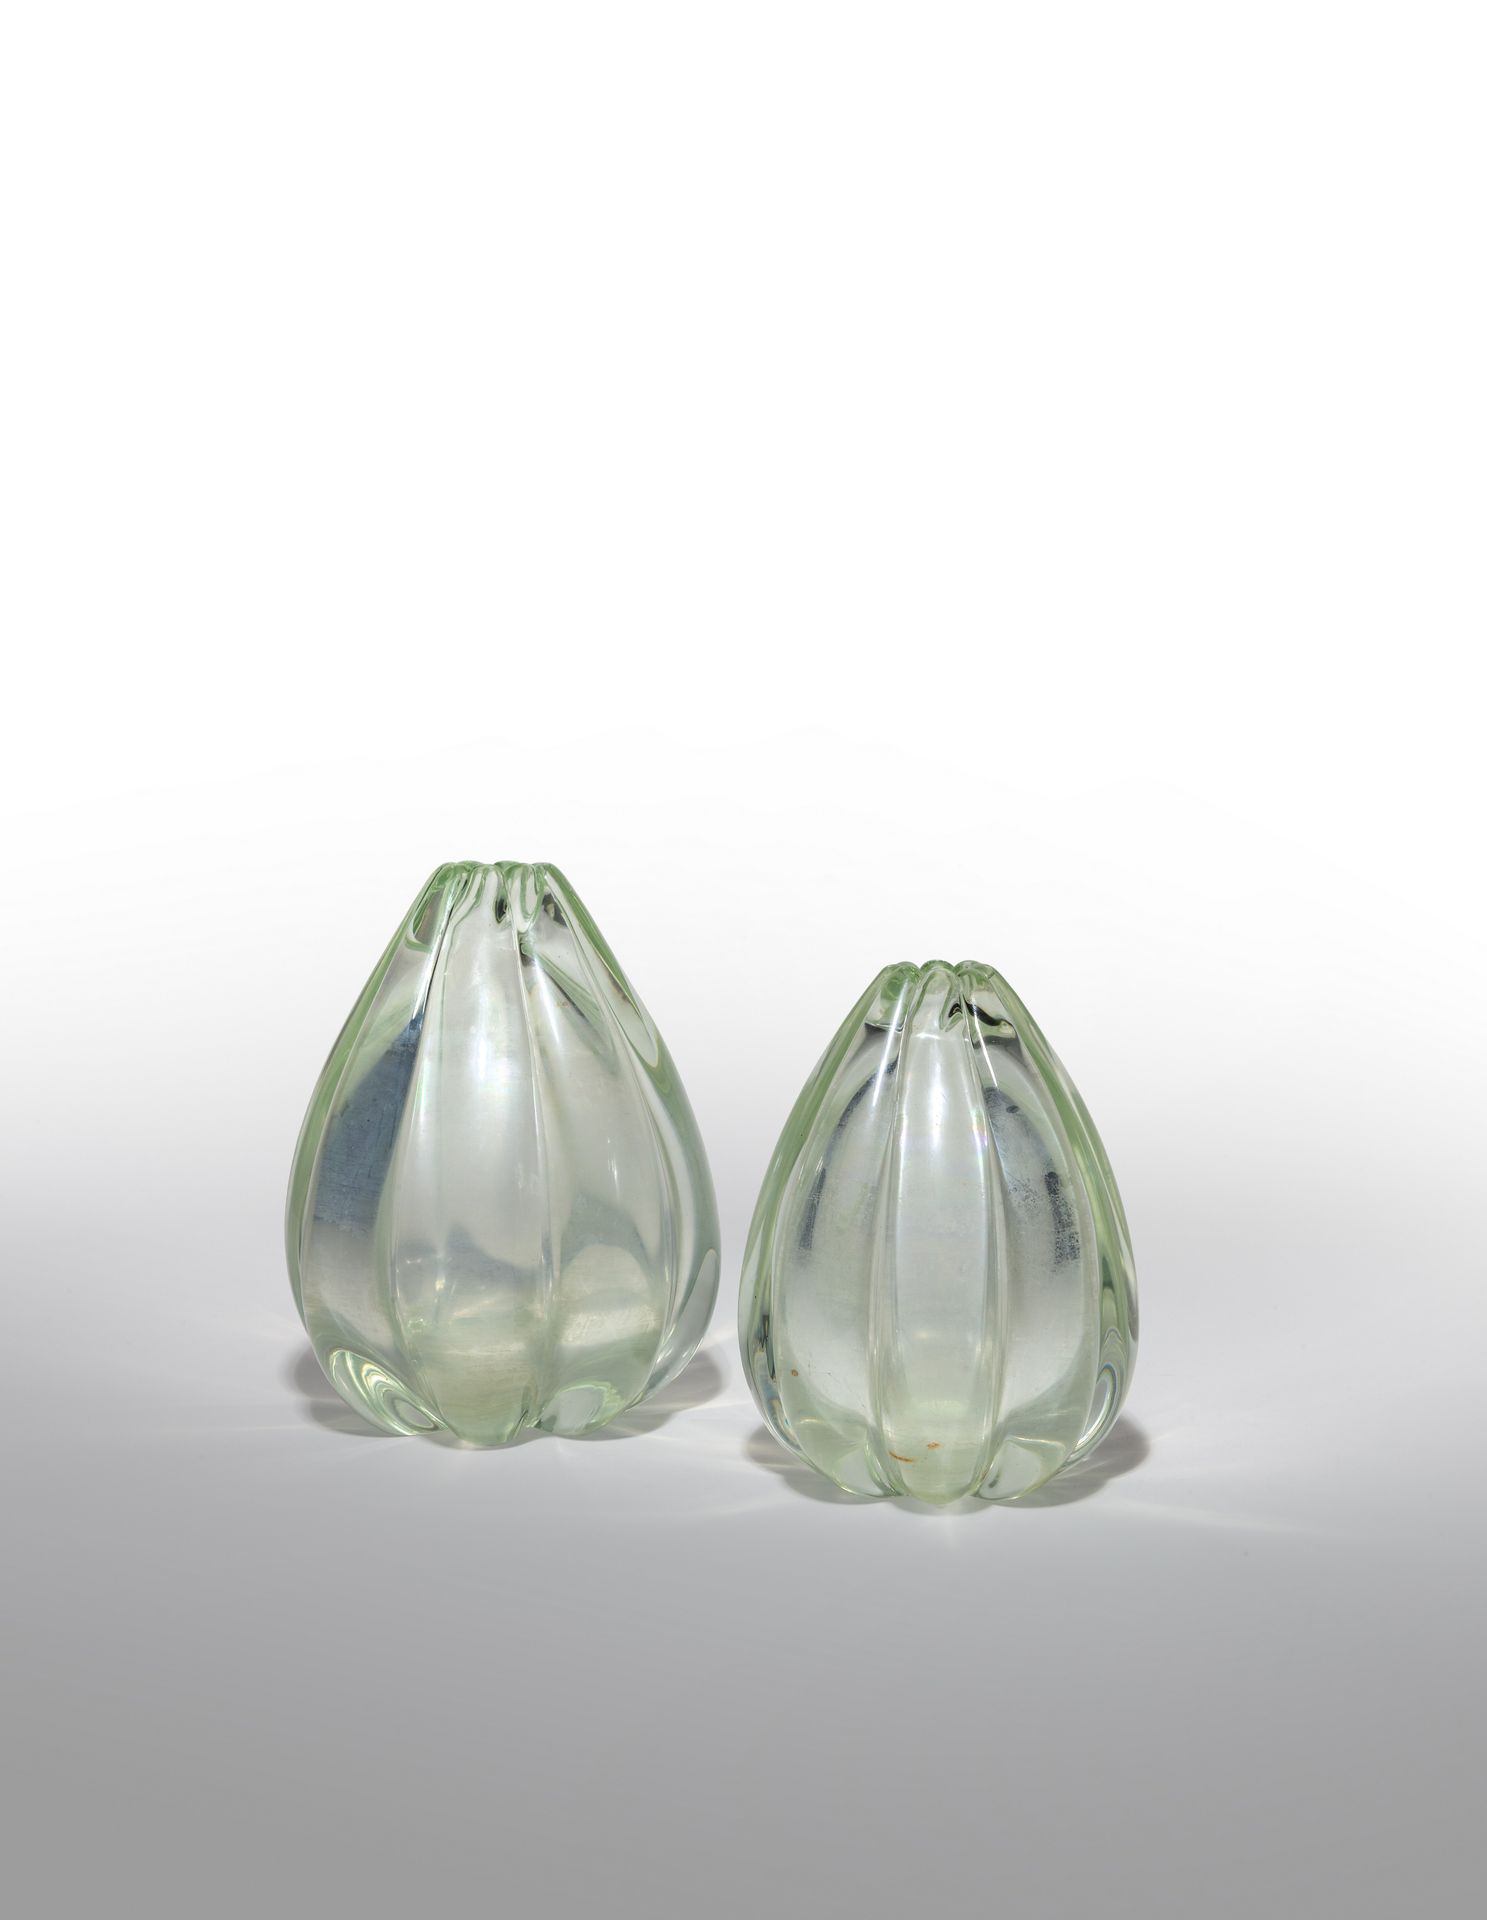 POLI FLAVIO SEGUSO VETRI D'ARTE flavio poli archimede seguso艺术玻璃。
两个带肋的彩虹色水晶花瓶。
&hellip;